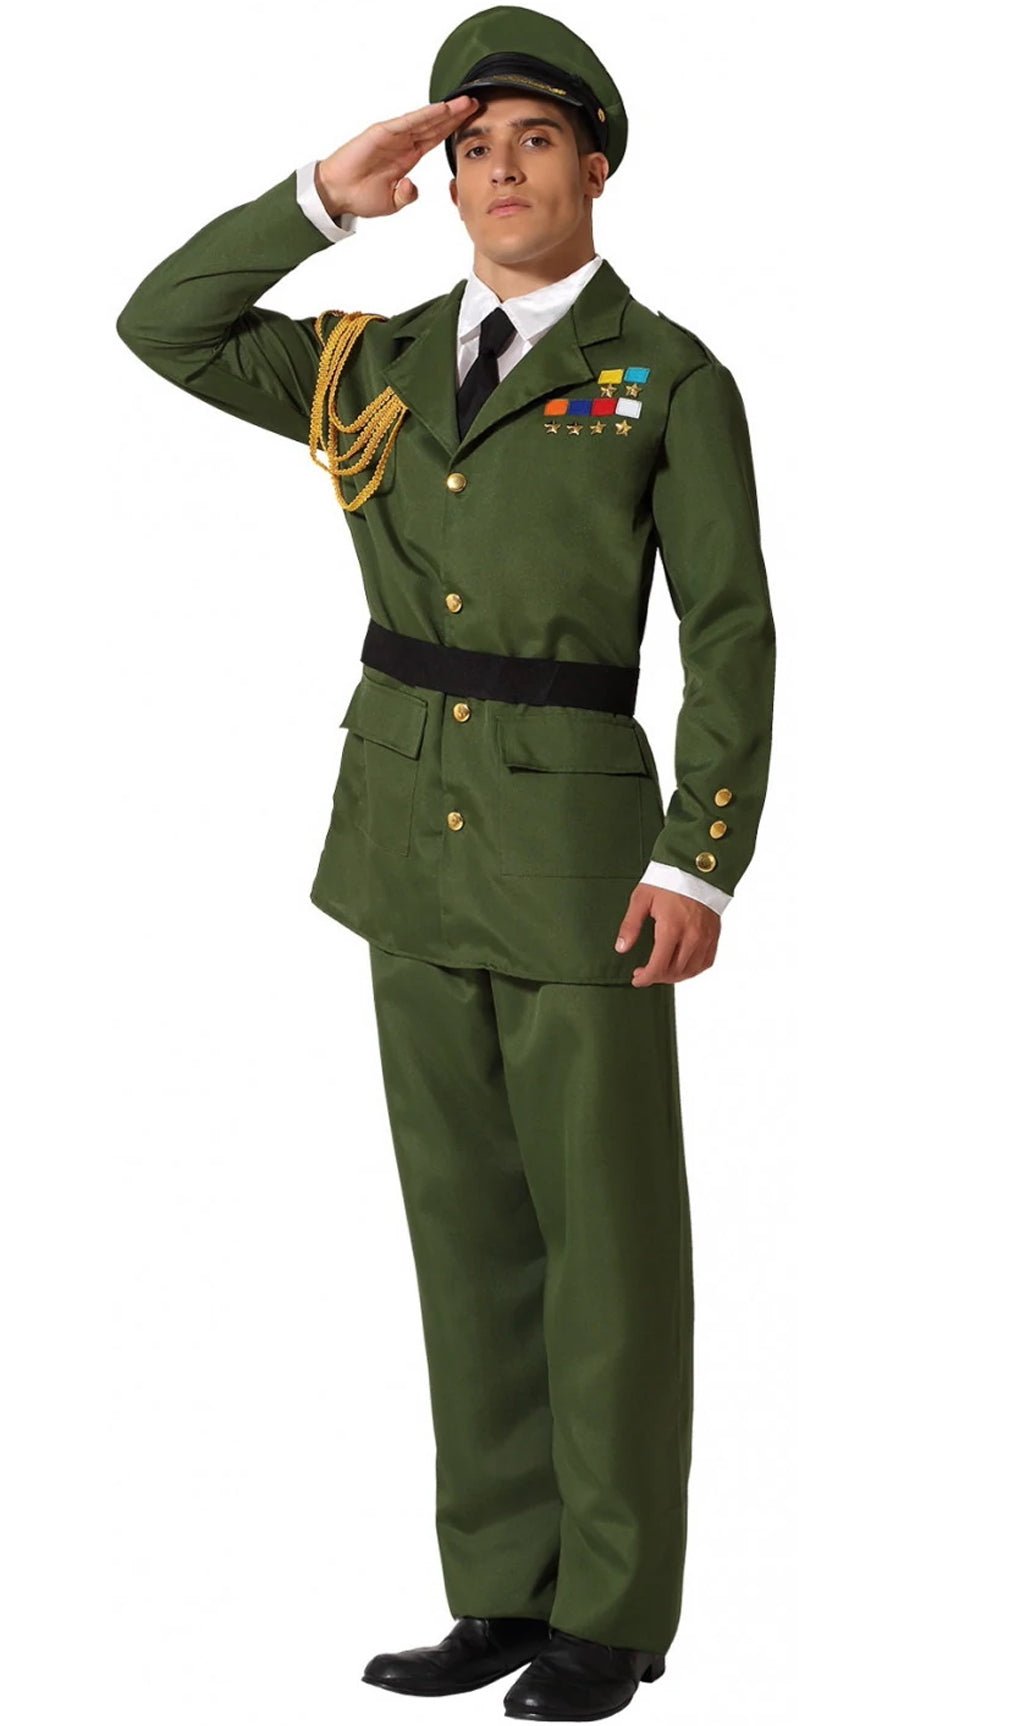 Comprar online Disfraz de Militar de Gala para hombre